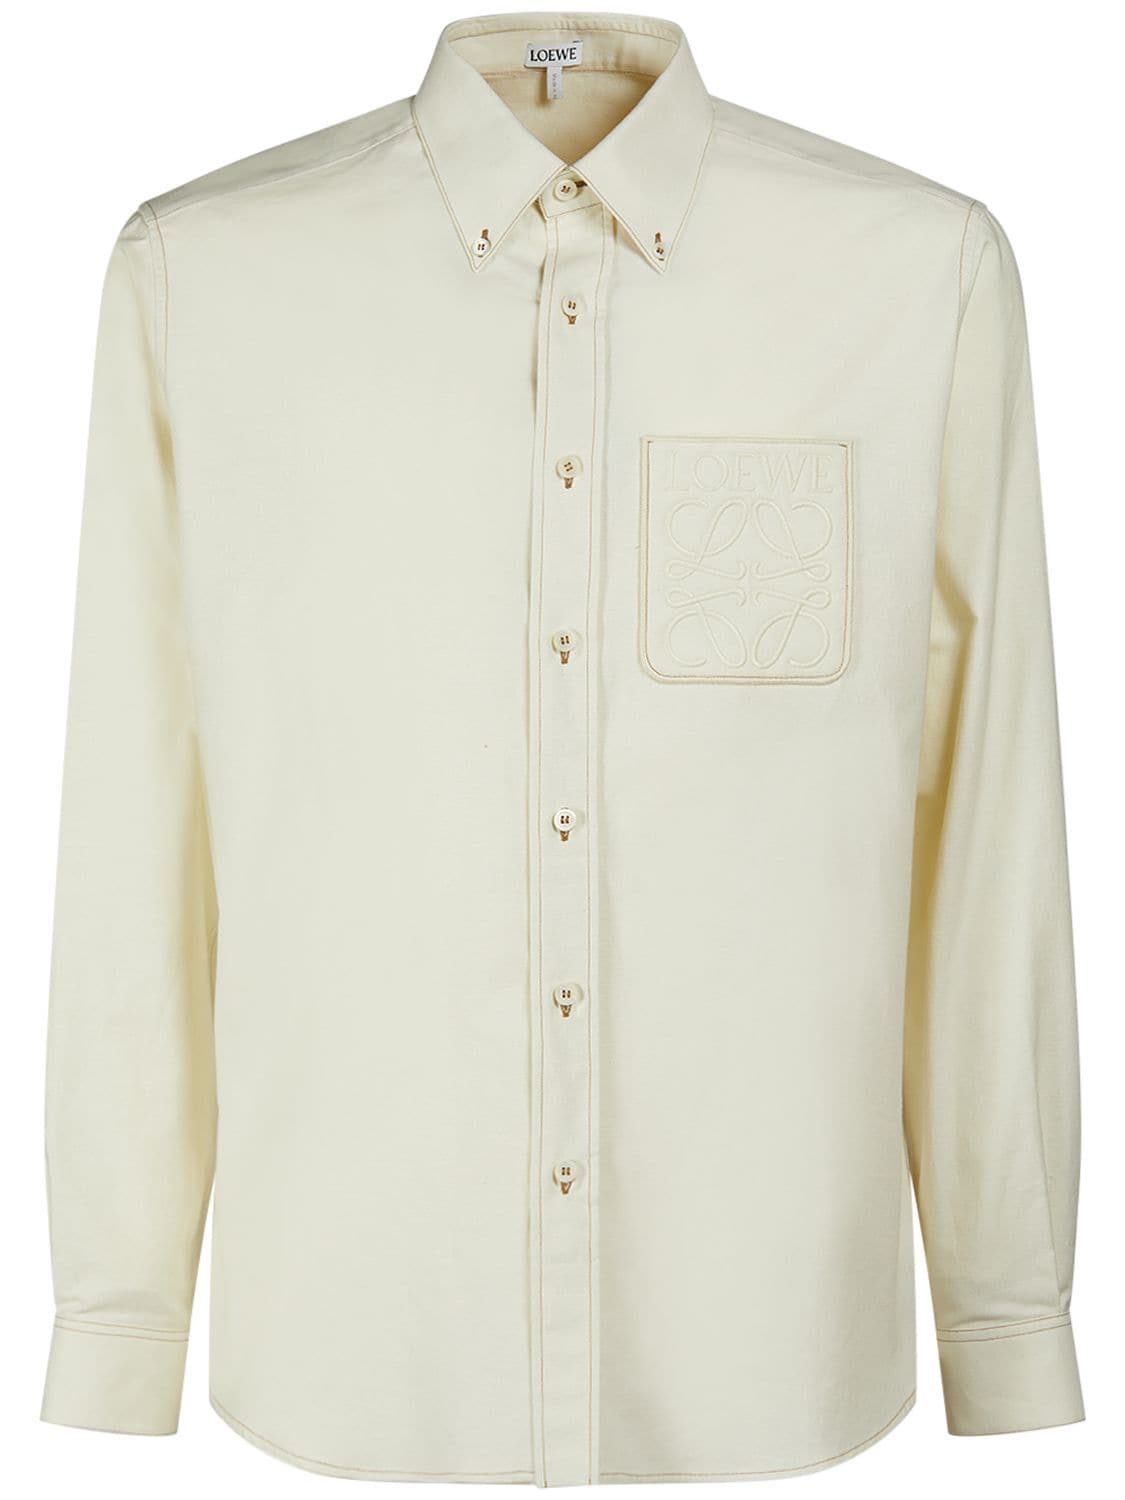 Anagram Pocket Light Cotton Oxford Shirt